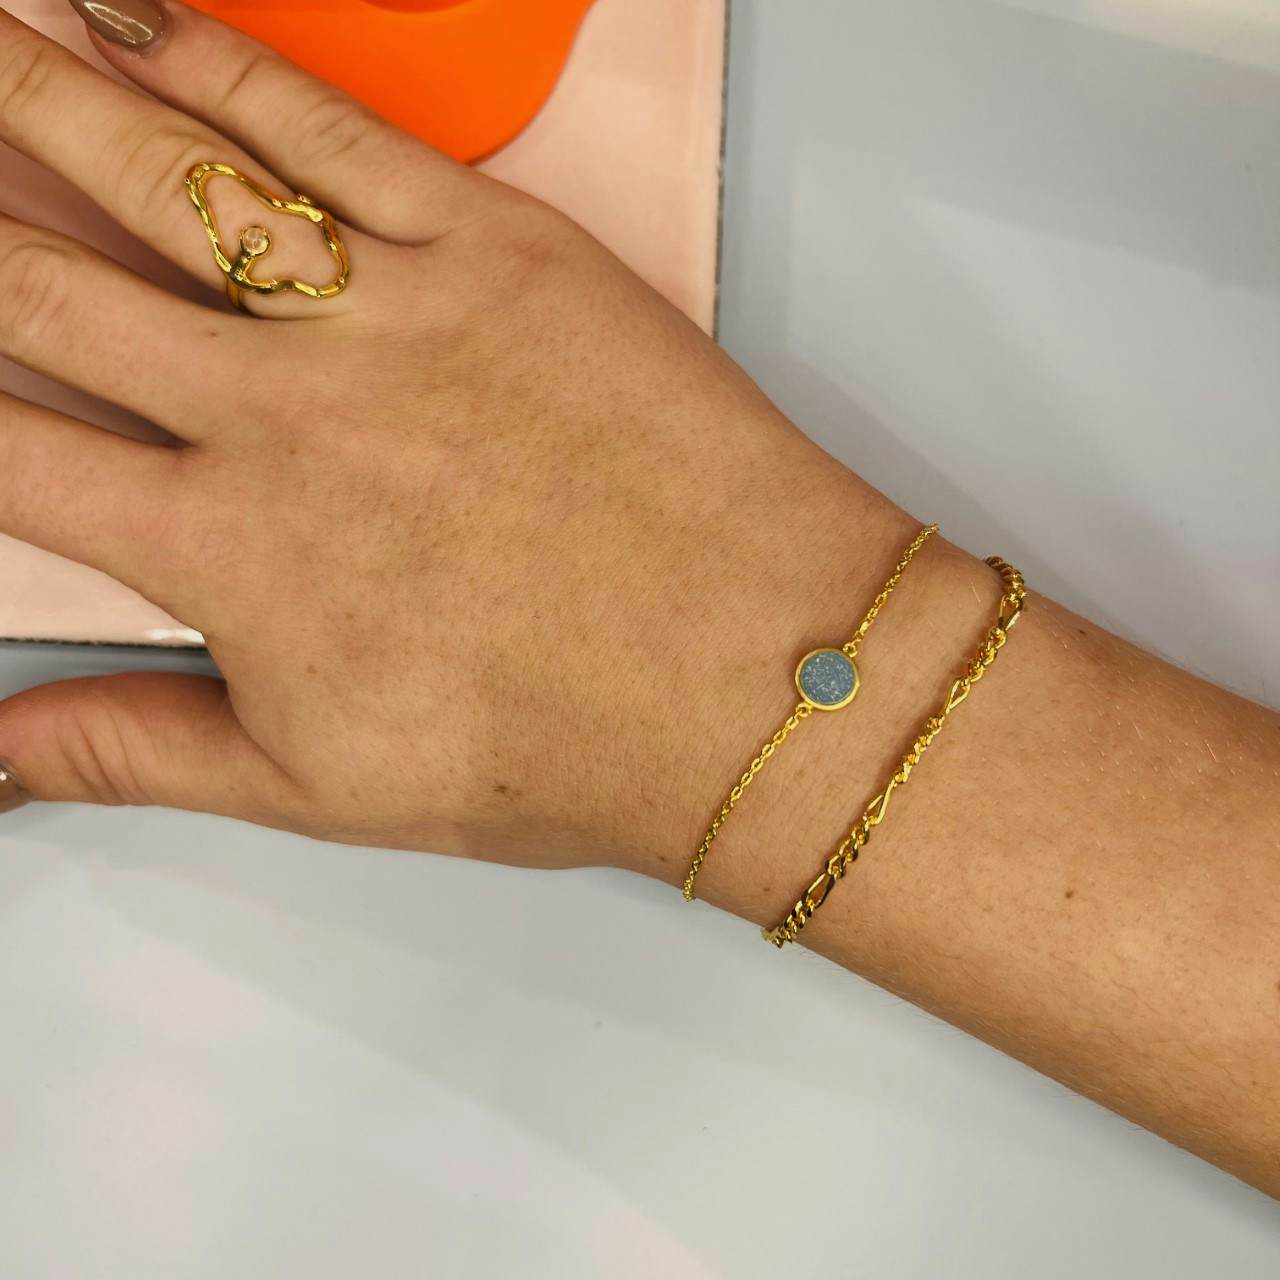 Lizzy bracelet from Sistie in Goldplated-Silver Sterling 925|Blank